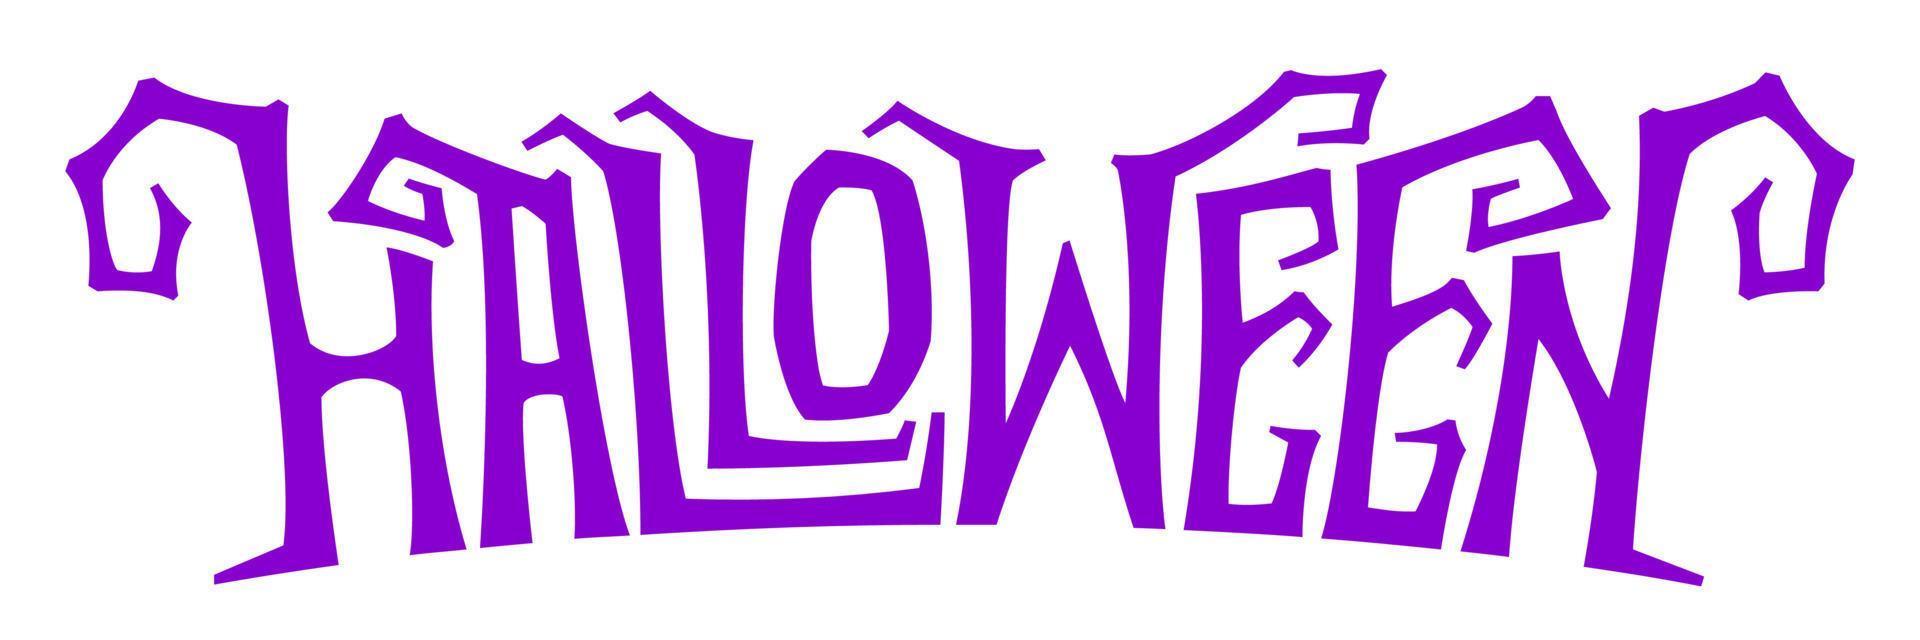 creativo Halloween testo. creativo lettering per Halloween vacanza. vettore